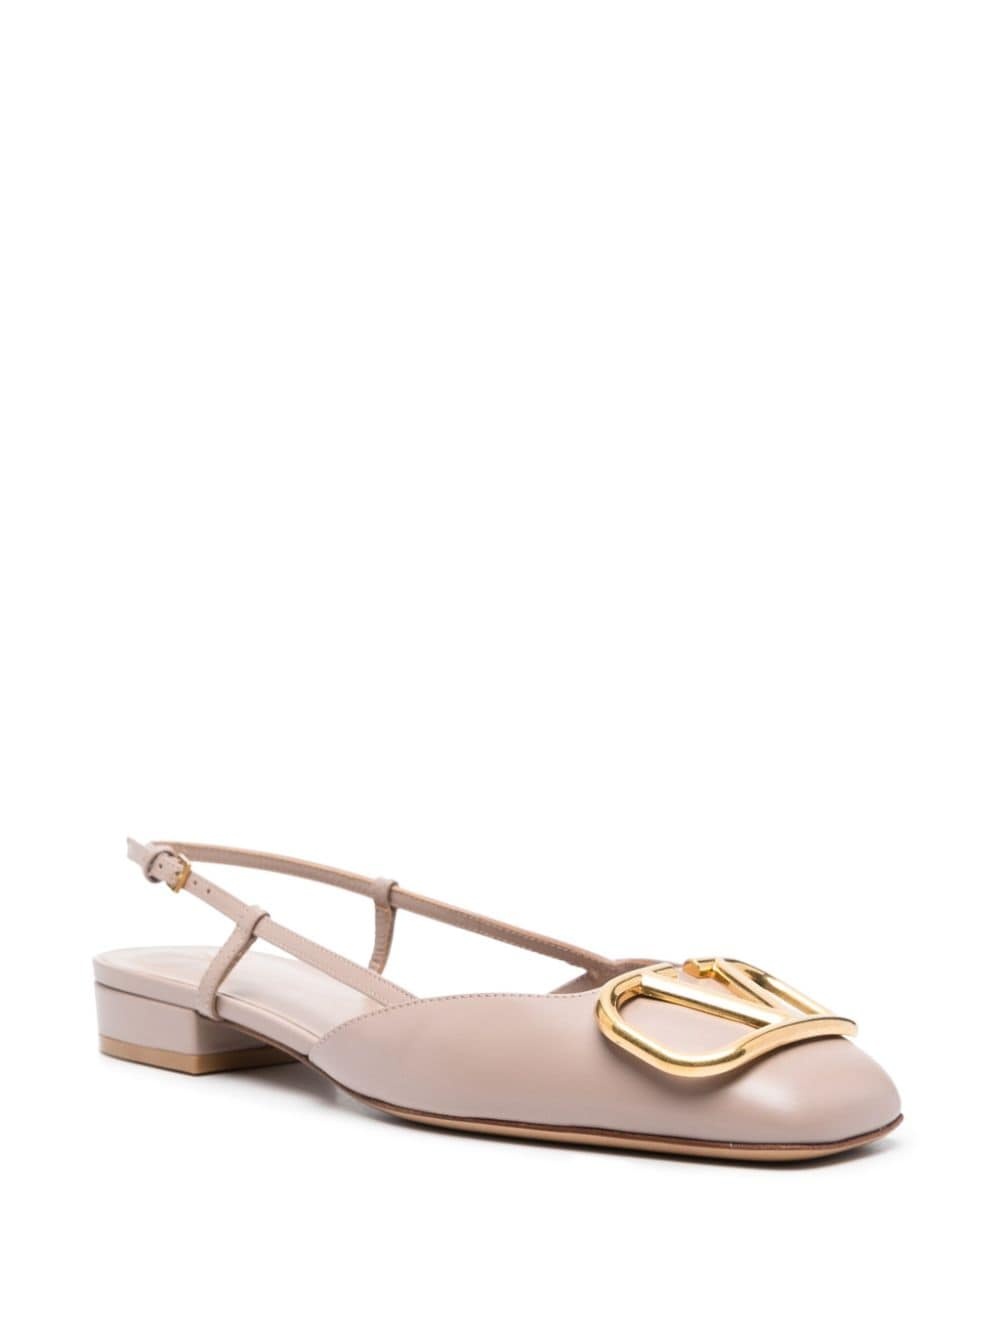 VLogo leather ballerina shoes - 2